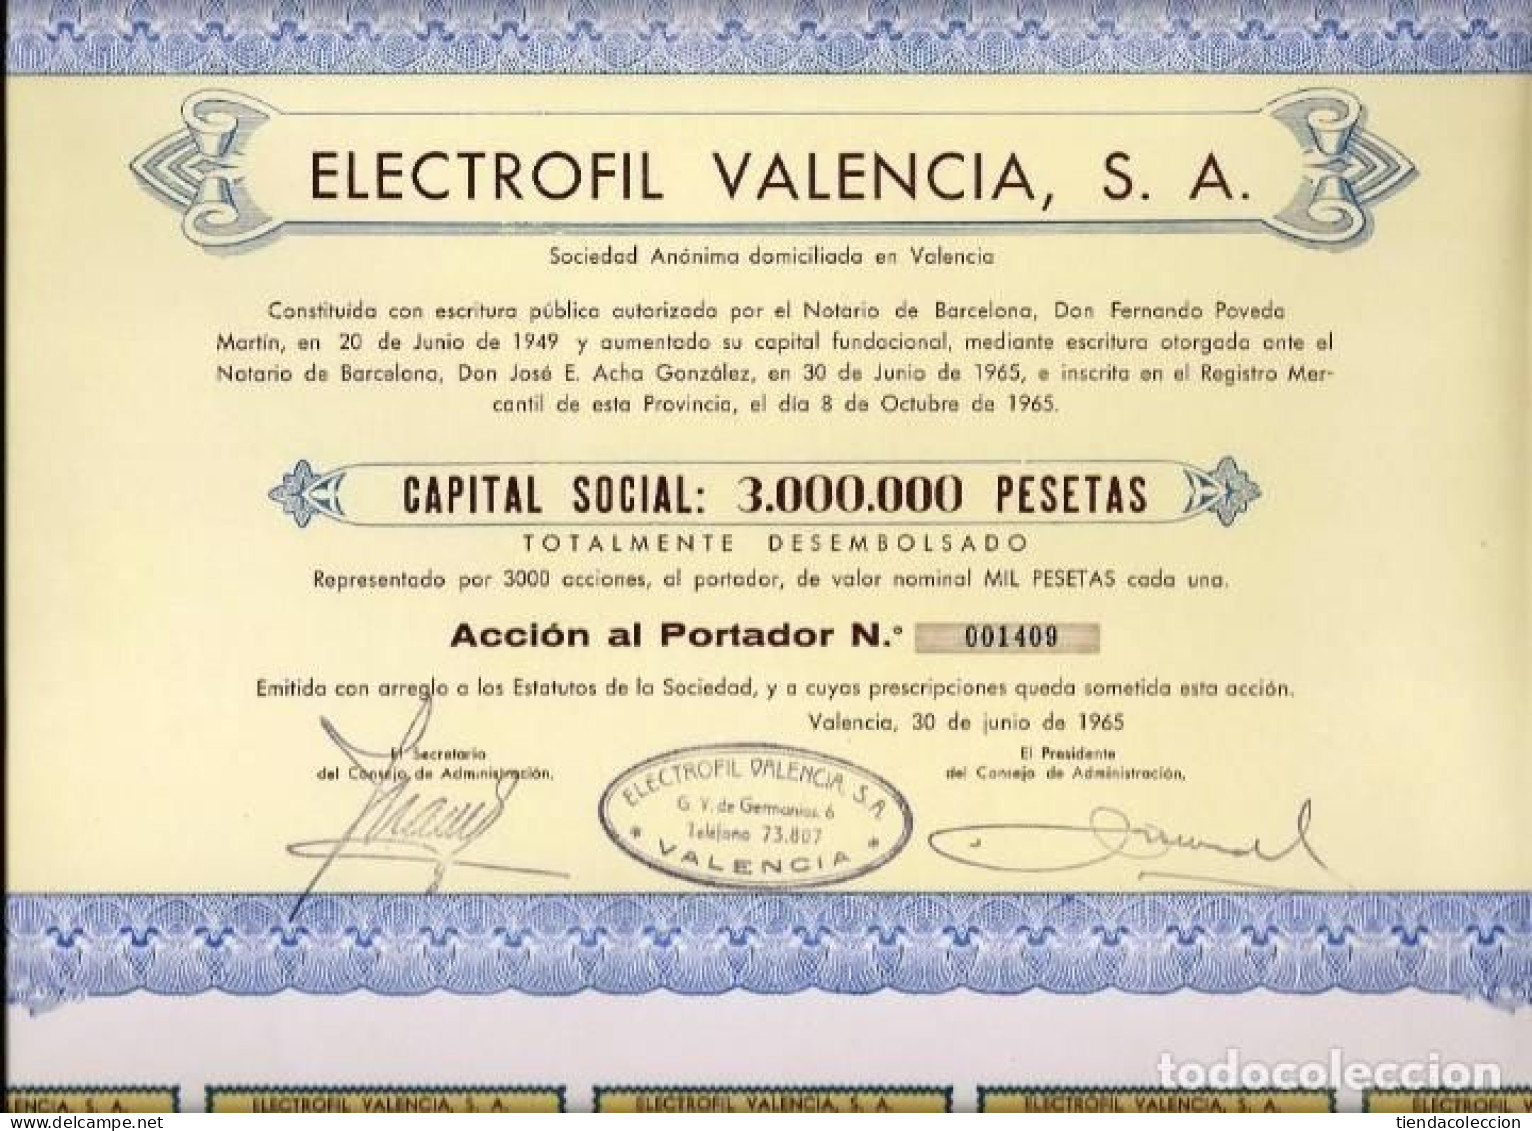 Electrofil Valencia, S. A. - Elektrizität & Gas